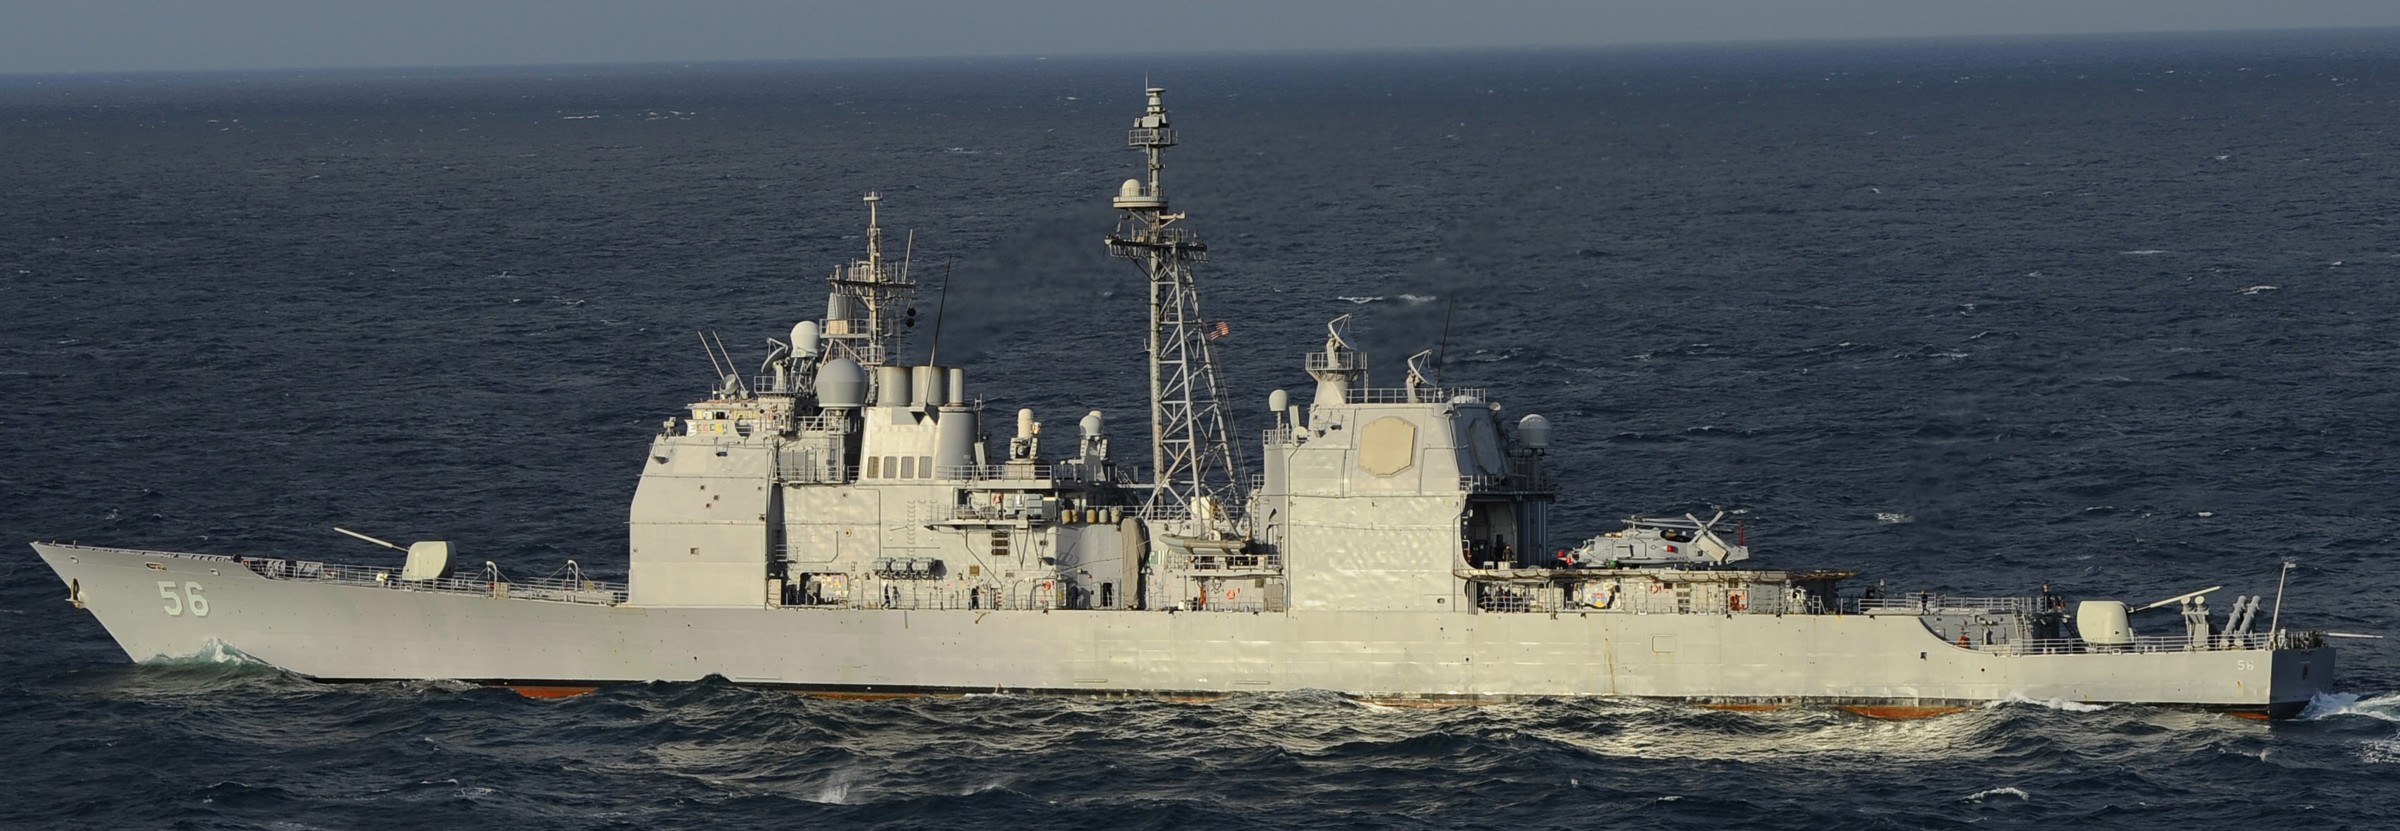 cg-56 uss san jacinto ticonderoga class guided missile cruiser aegis us navy 41